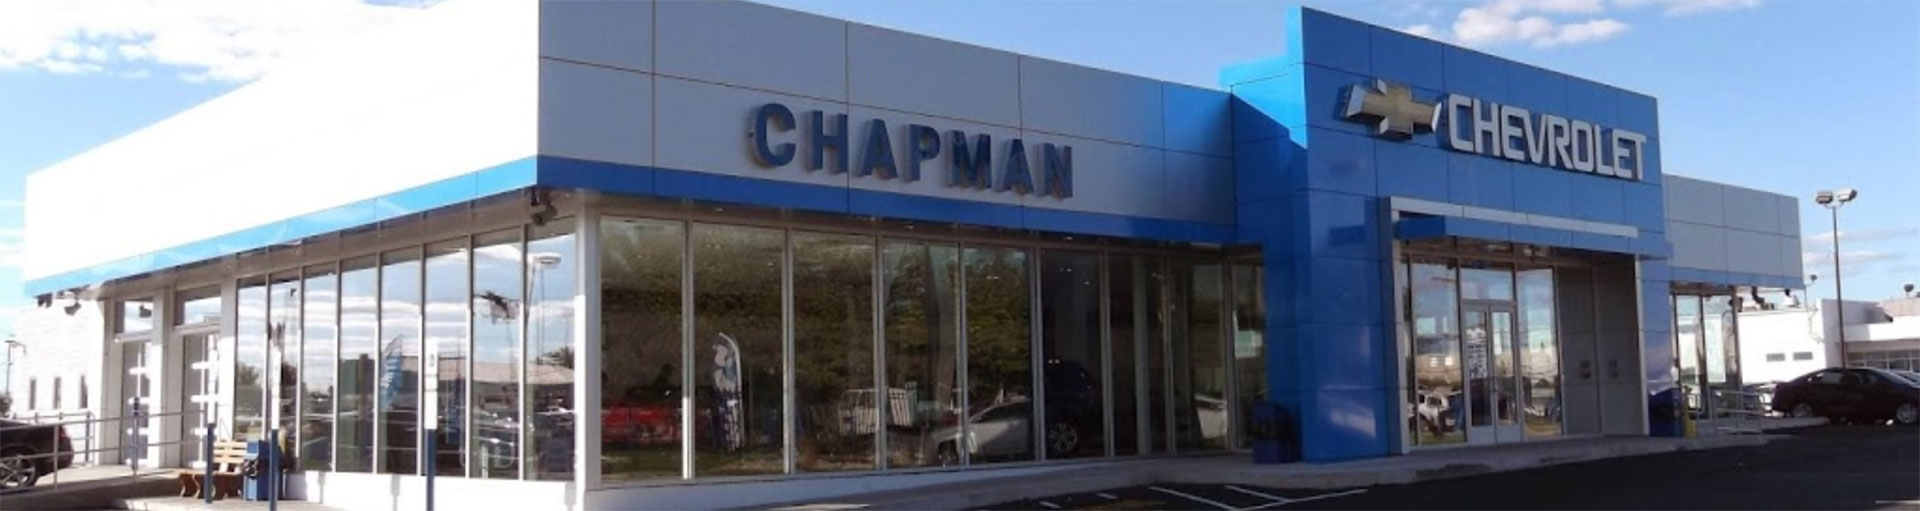 Chapman Chevrolet Service Department